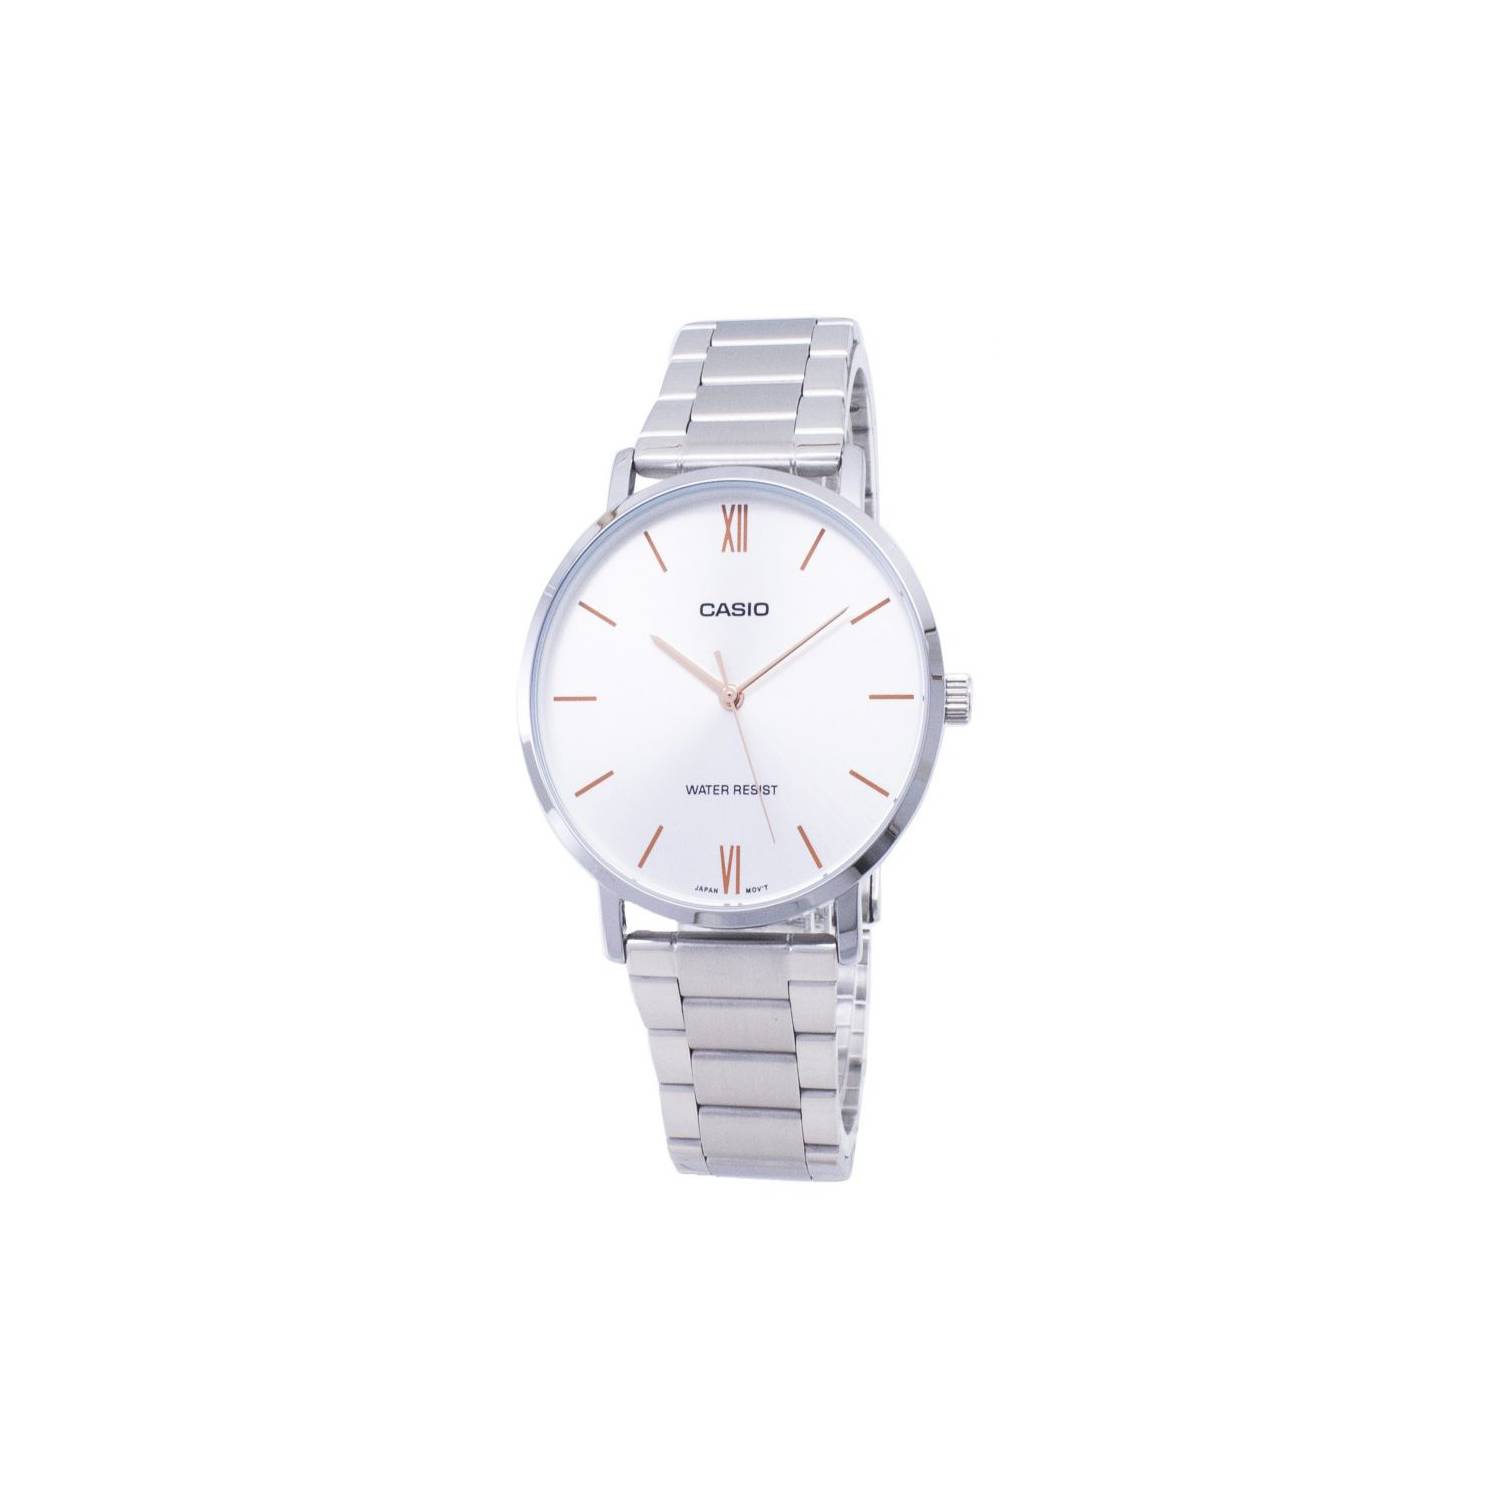 ⇨ Reloj Casio de hombre plateado con esfera blanca, MTP-1310PD-7BVEG.